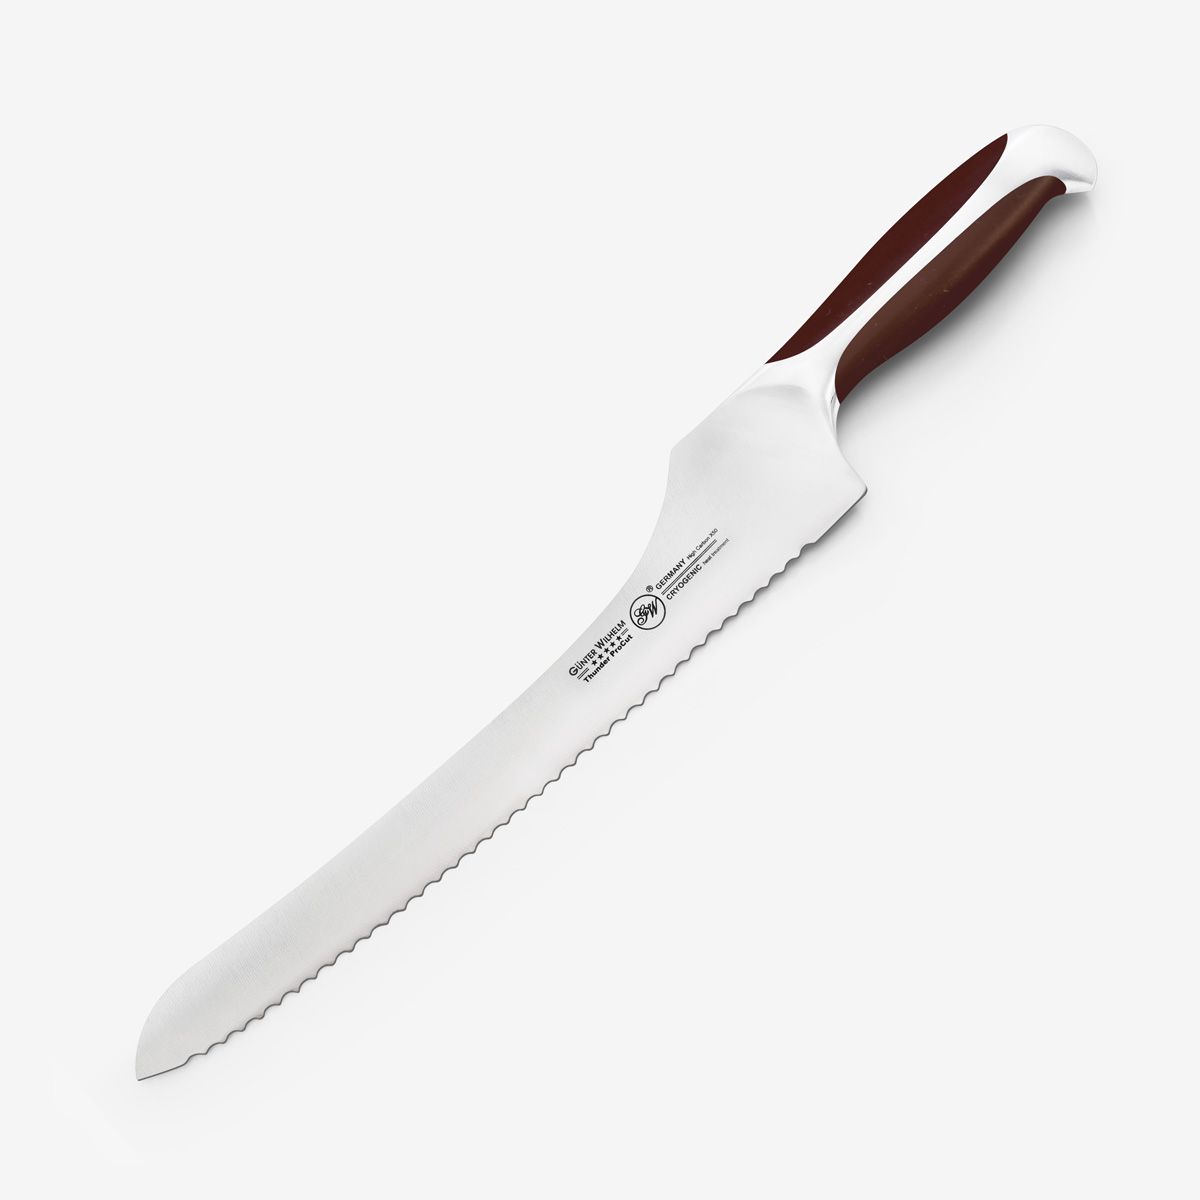 Gunter Wilhelm Thunder Offset Bread Knife, 10 Inch | Brownish ABS Handle SKU: 51-518-1510